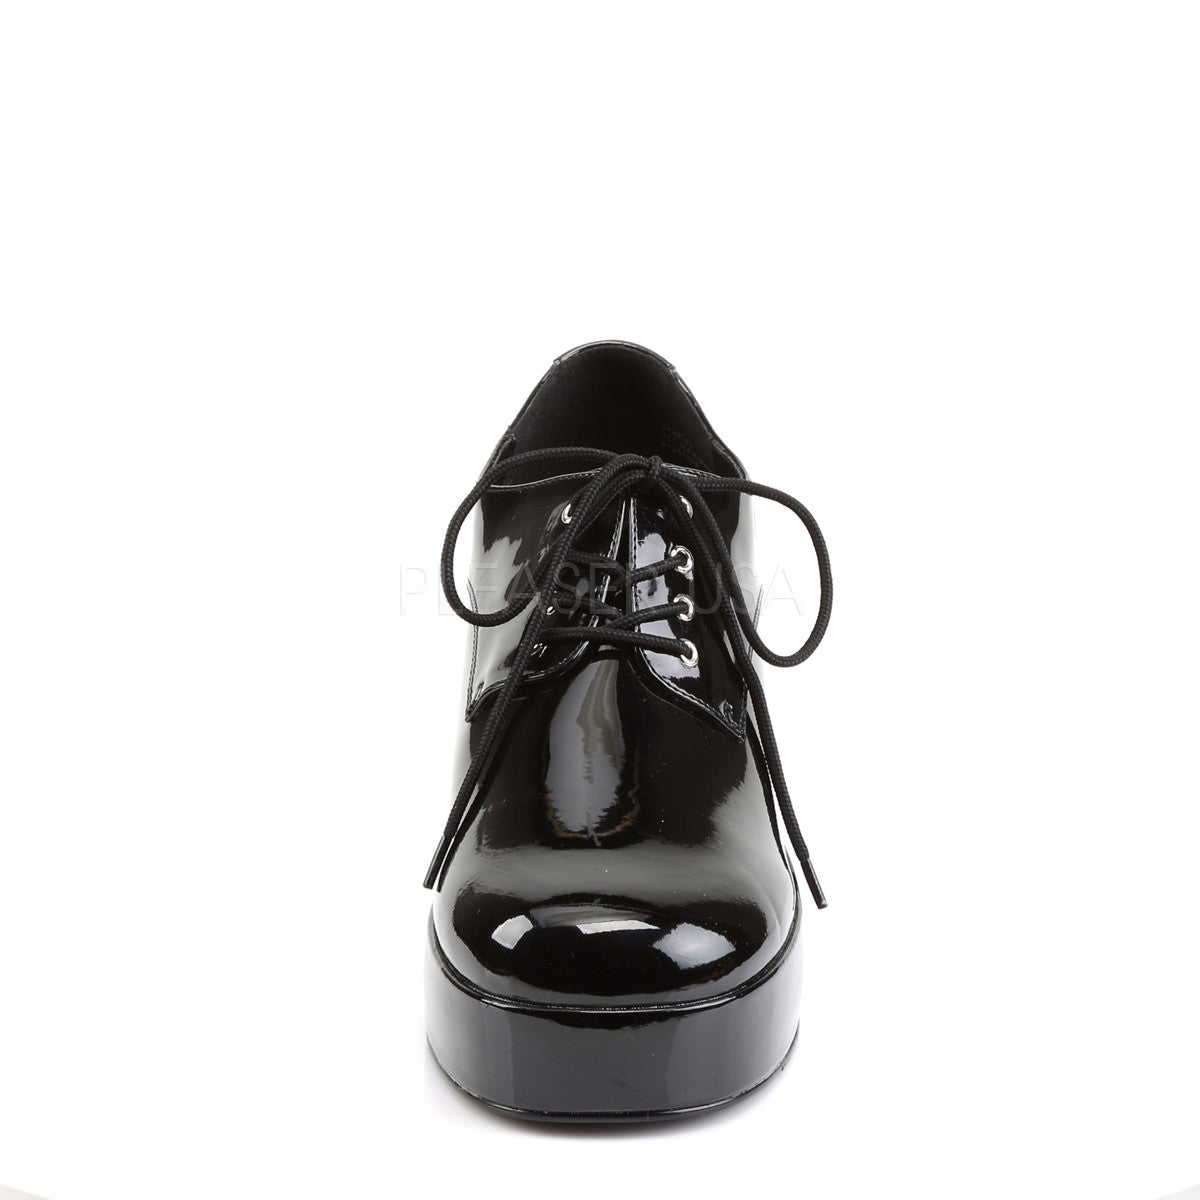 JAZZ-02 Black Patent Platform Shoes